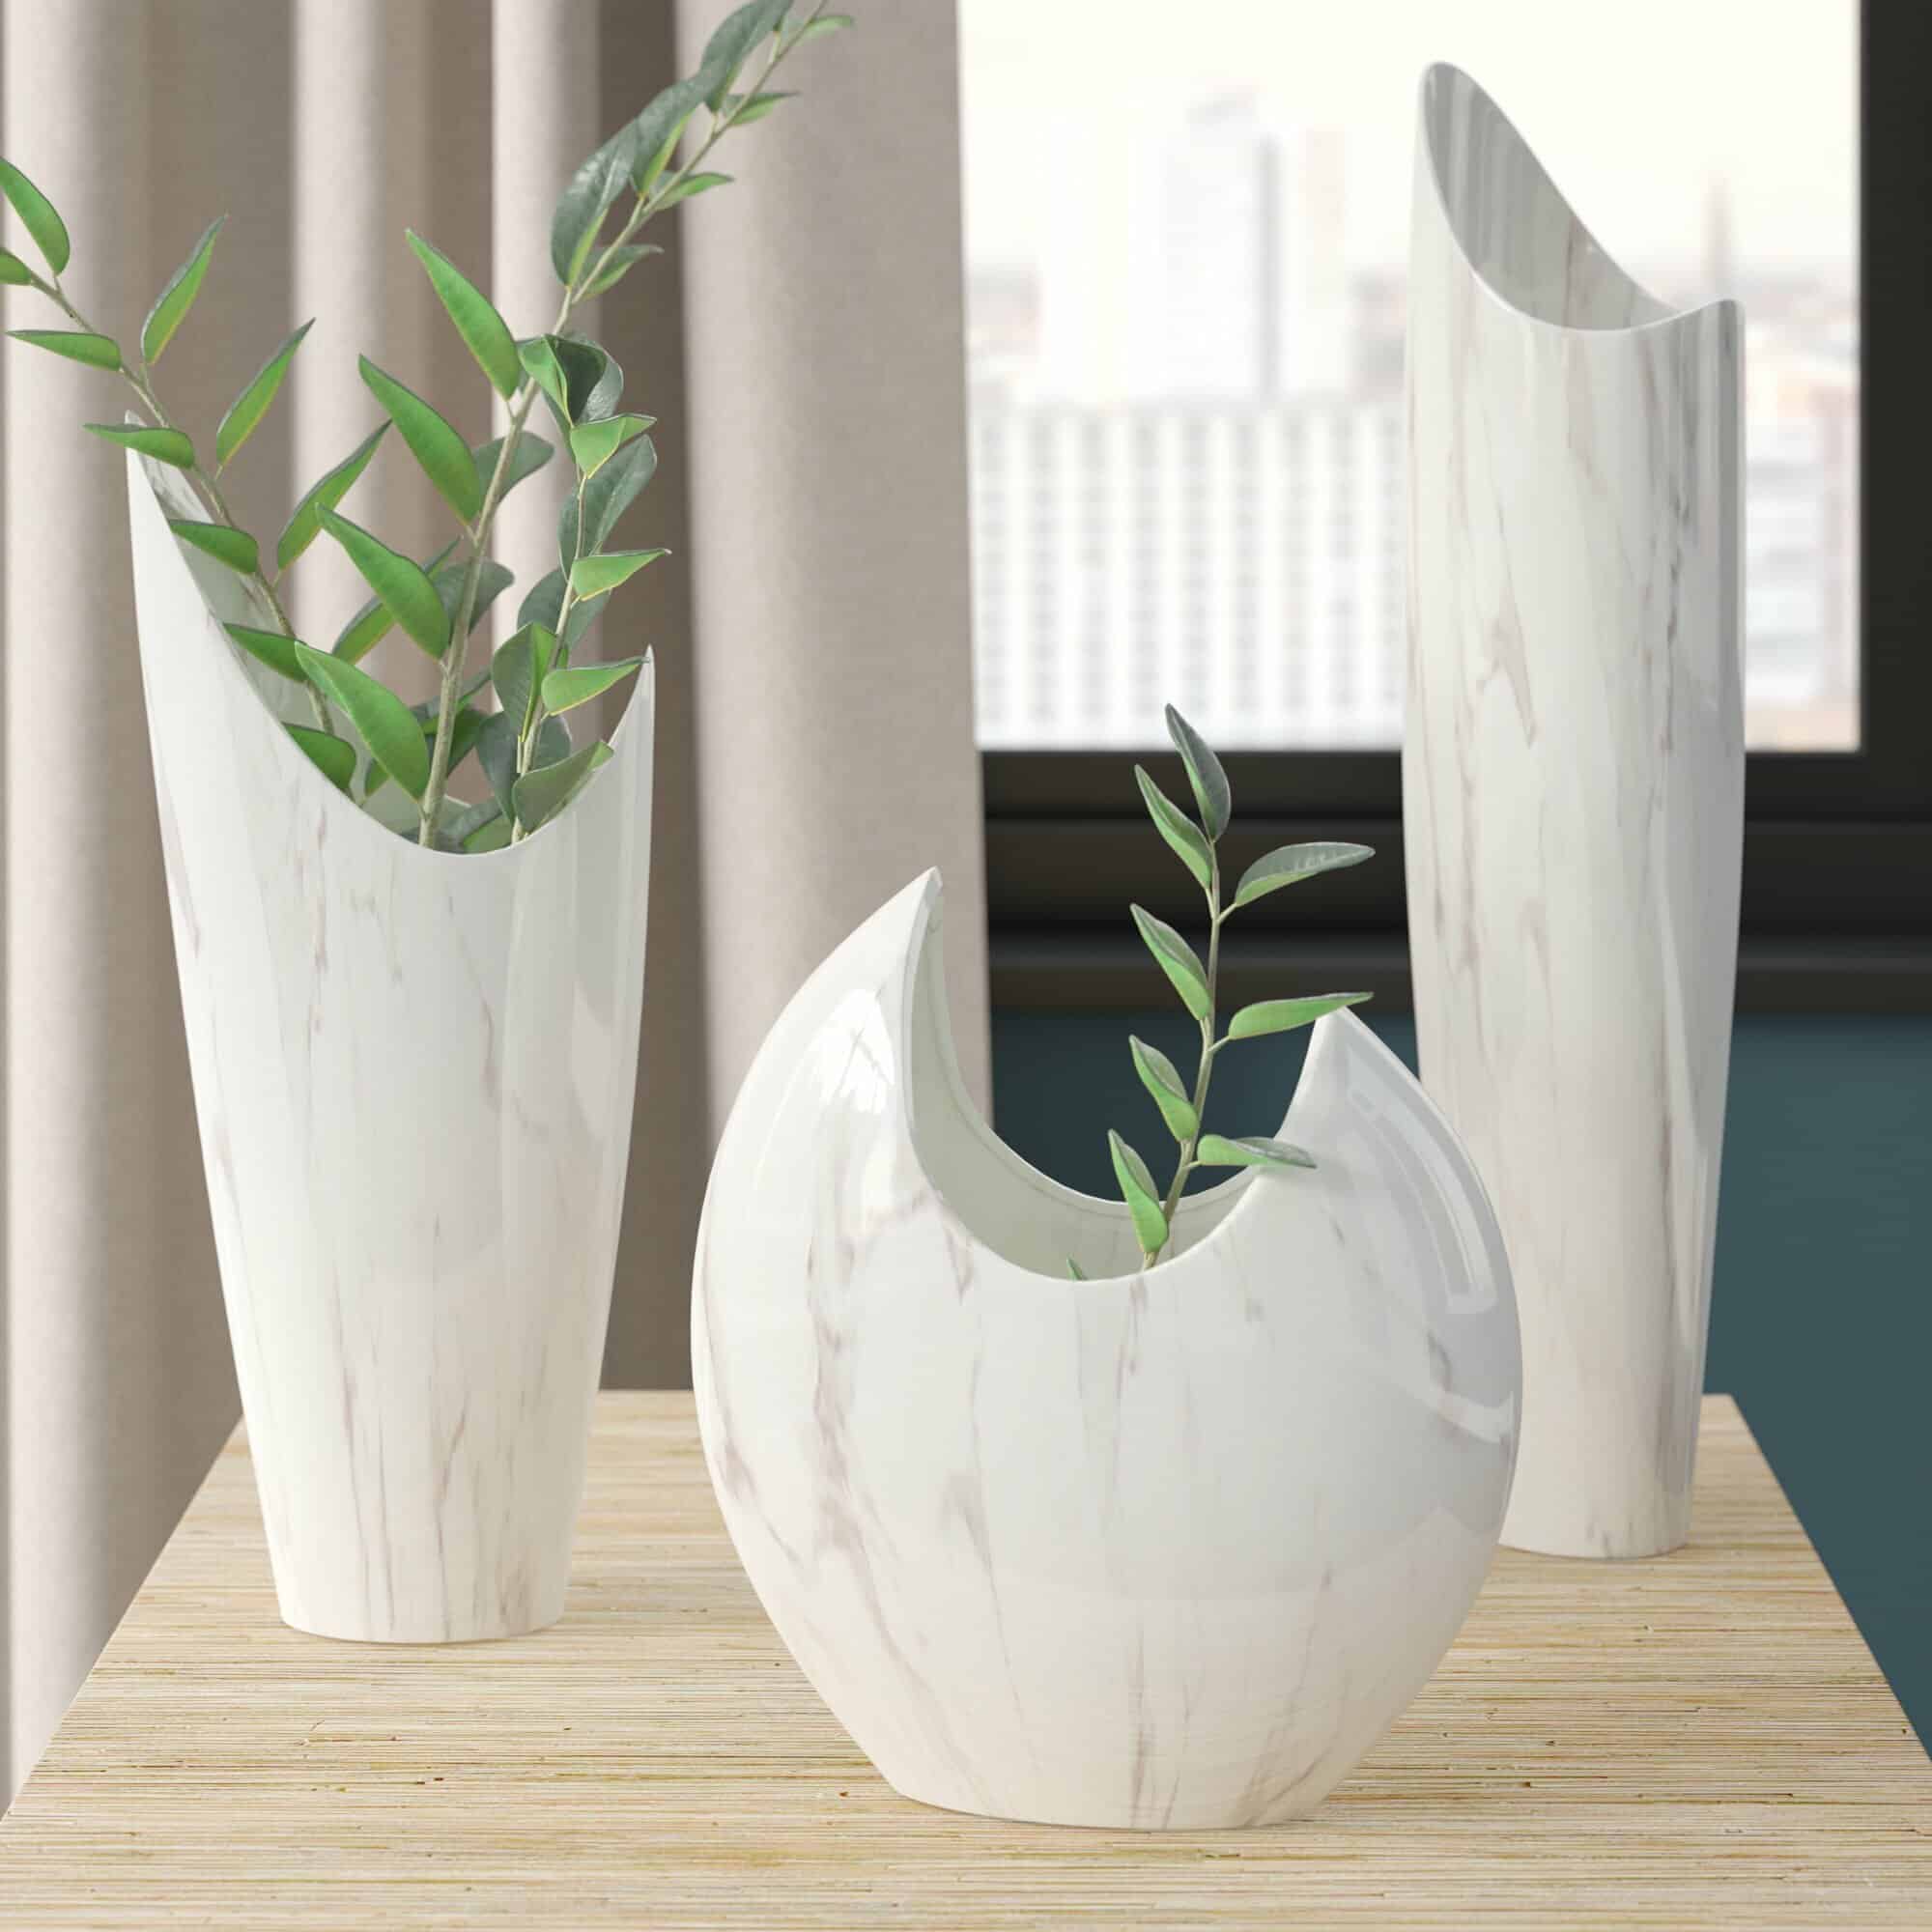 Ceramic Vases Allow Versatility In Every Way